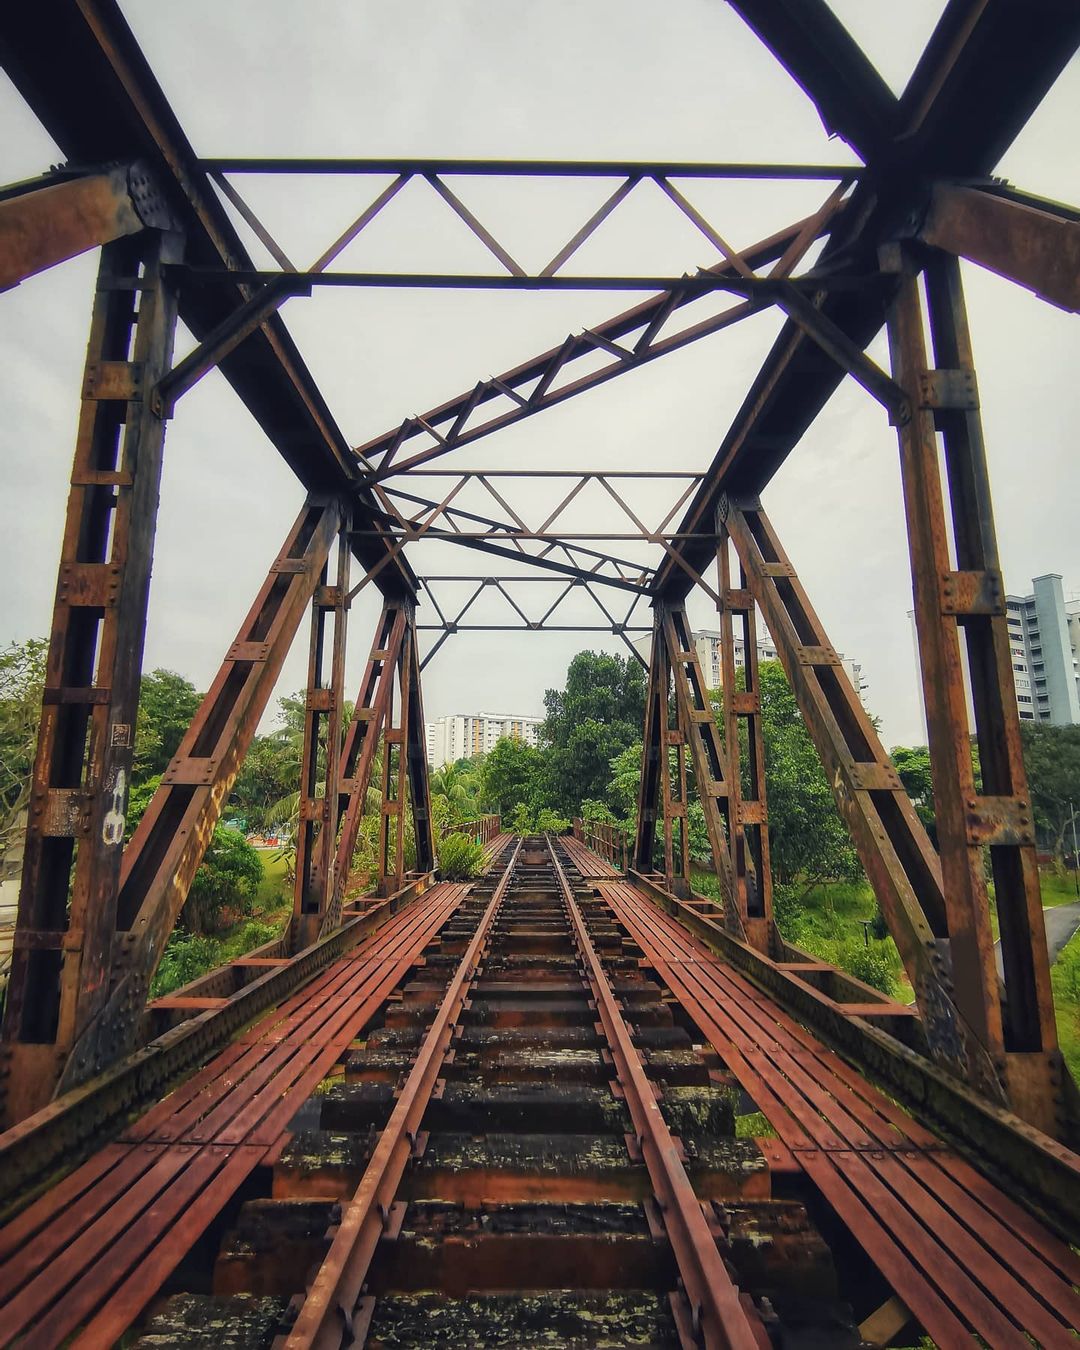 Jurong railway line - bridge